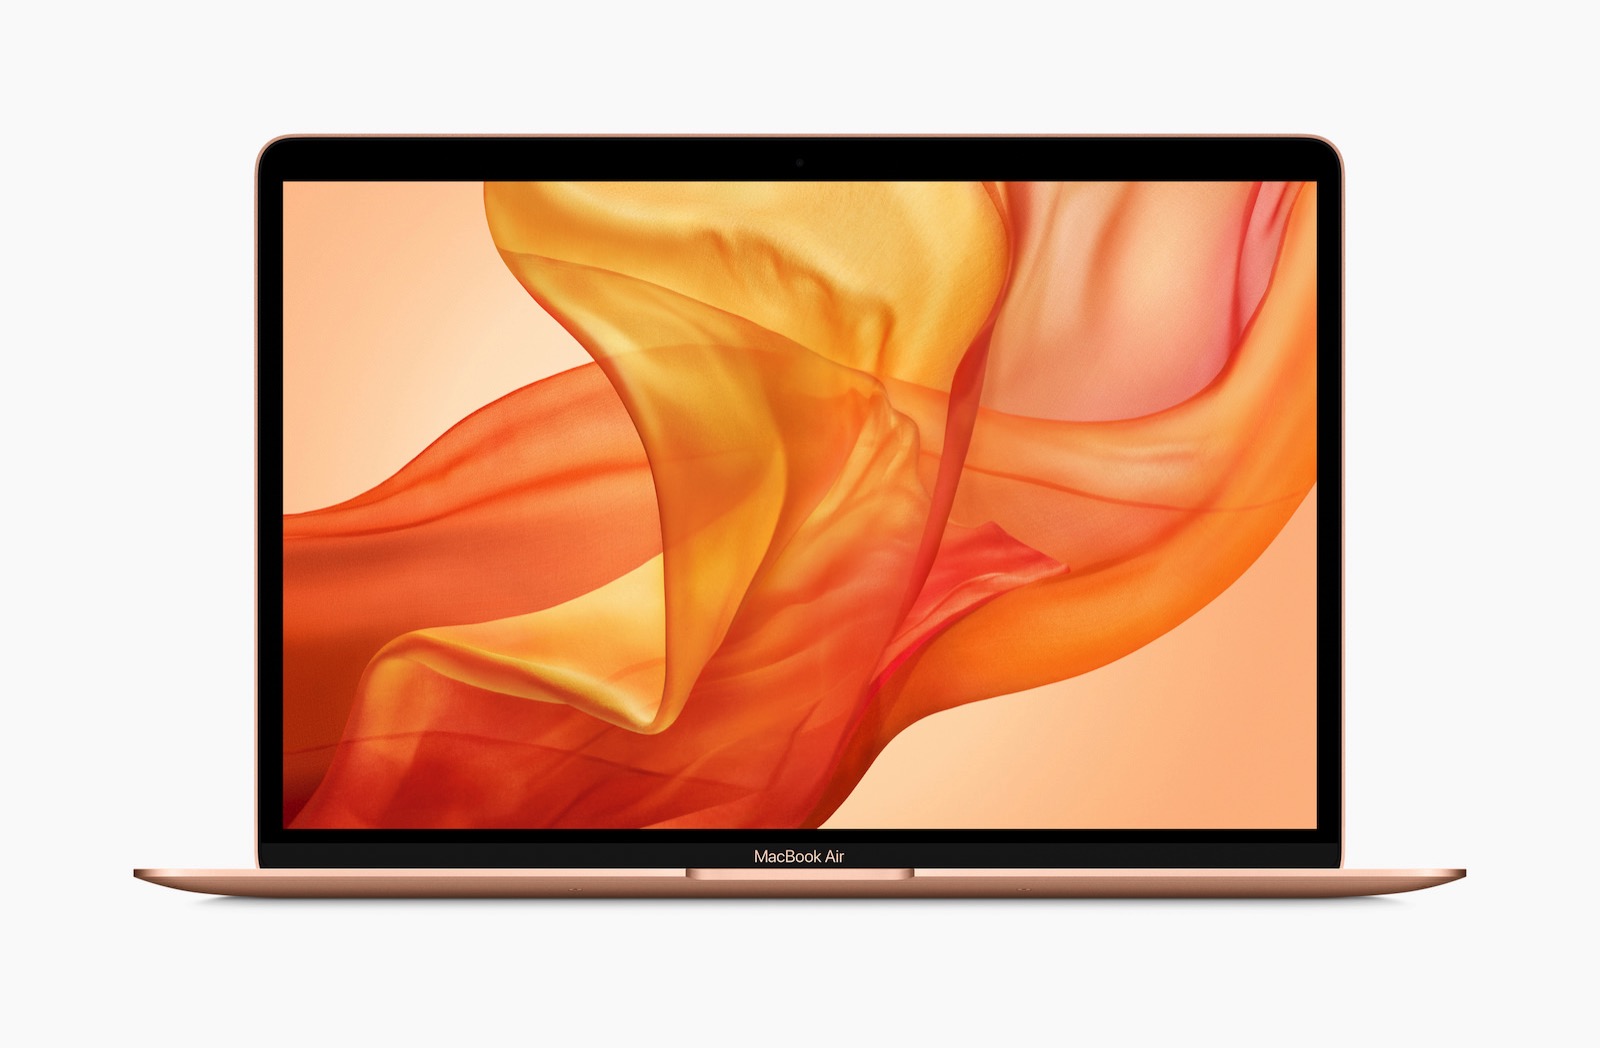 MacBook-Air-gold-10302018.jpg